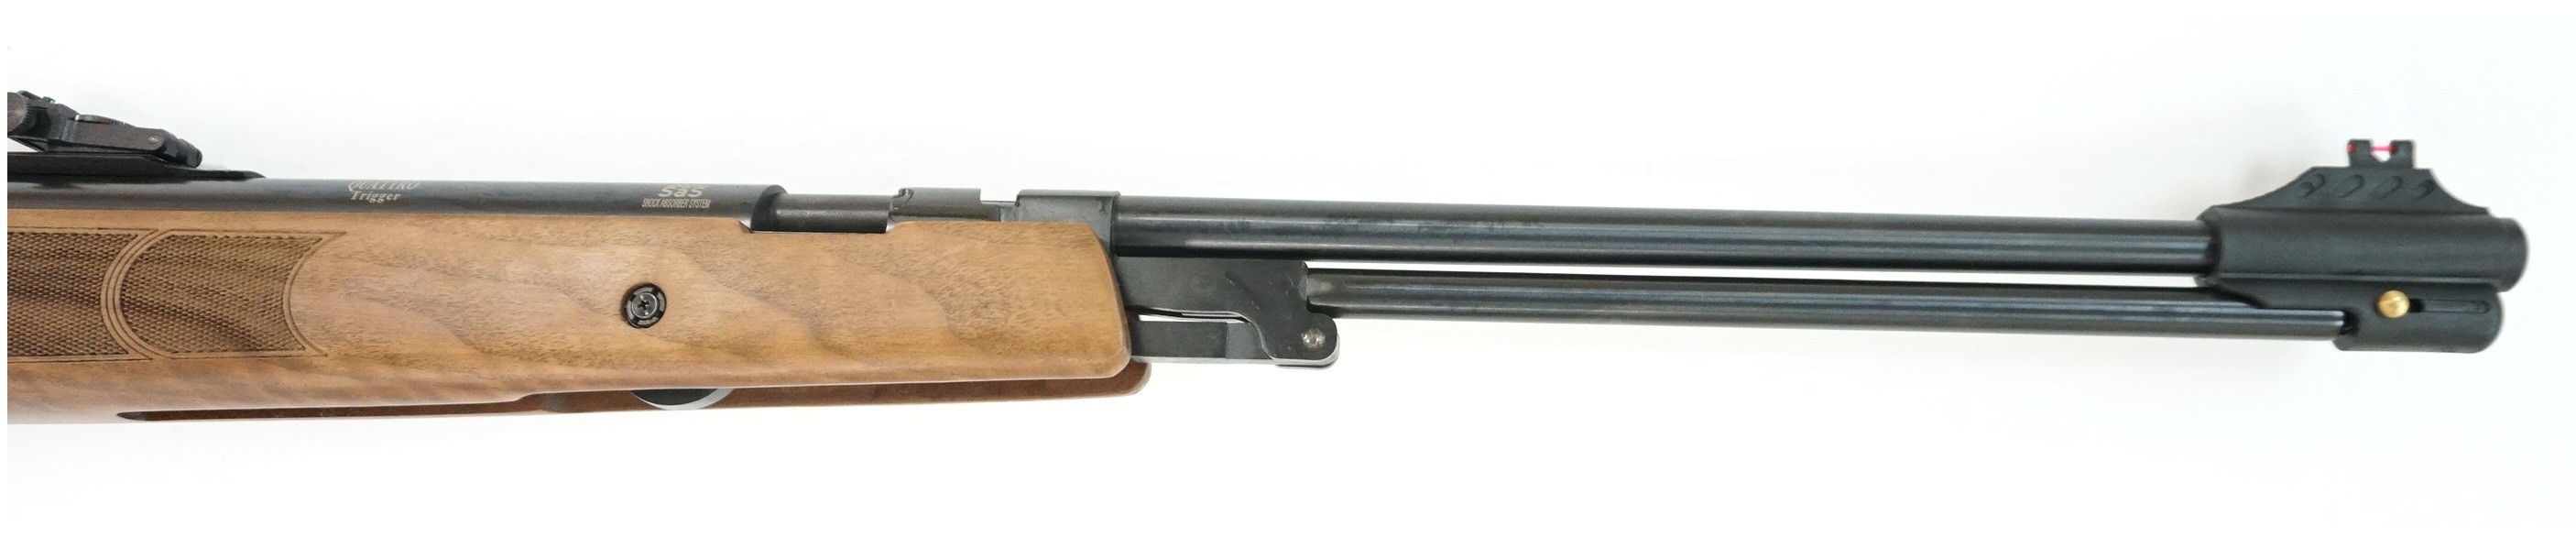 Пневматическая винтовка Hatsan Torpedo 100X (дерево), изображение 13